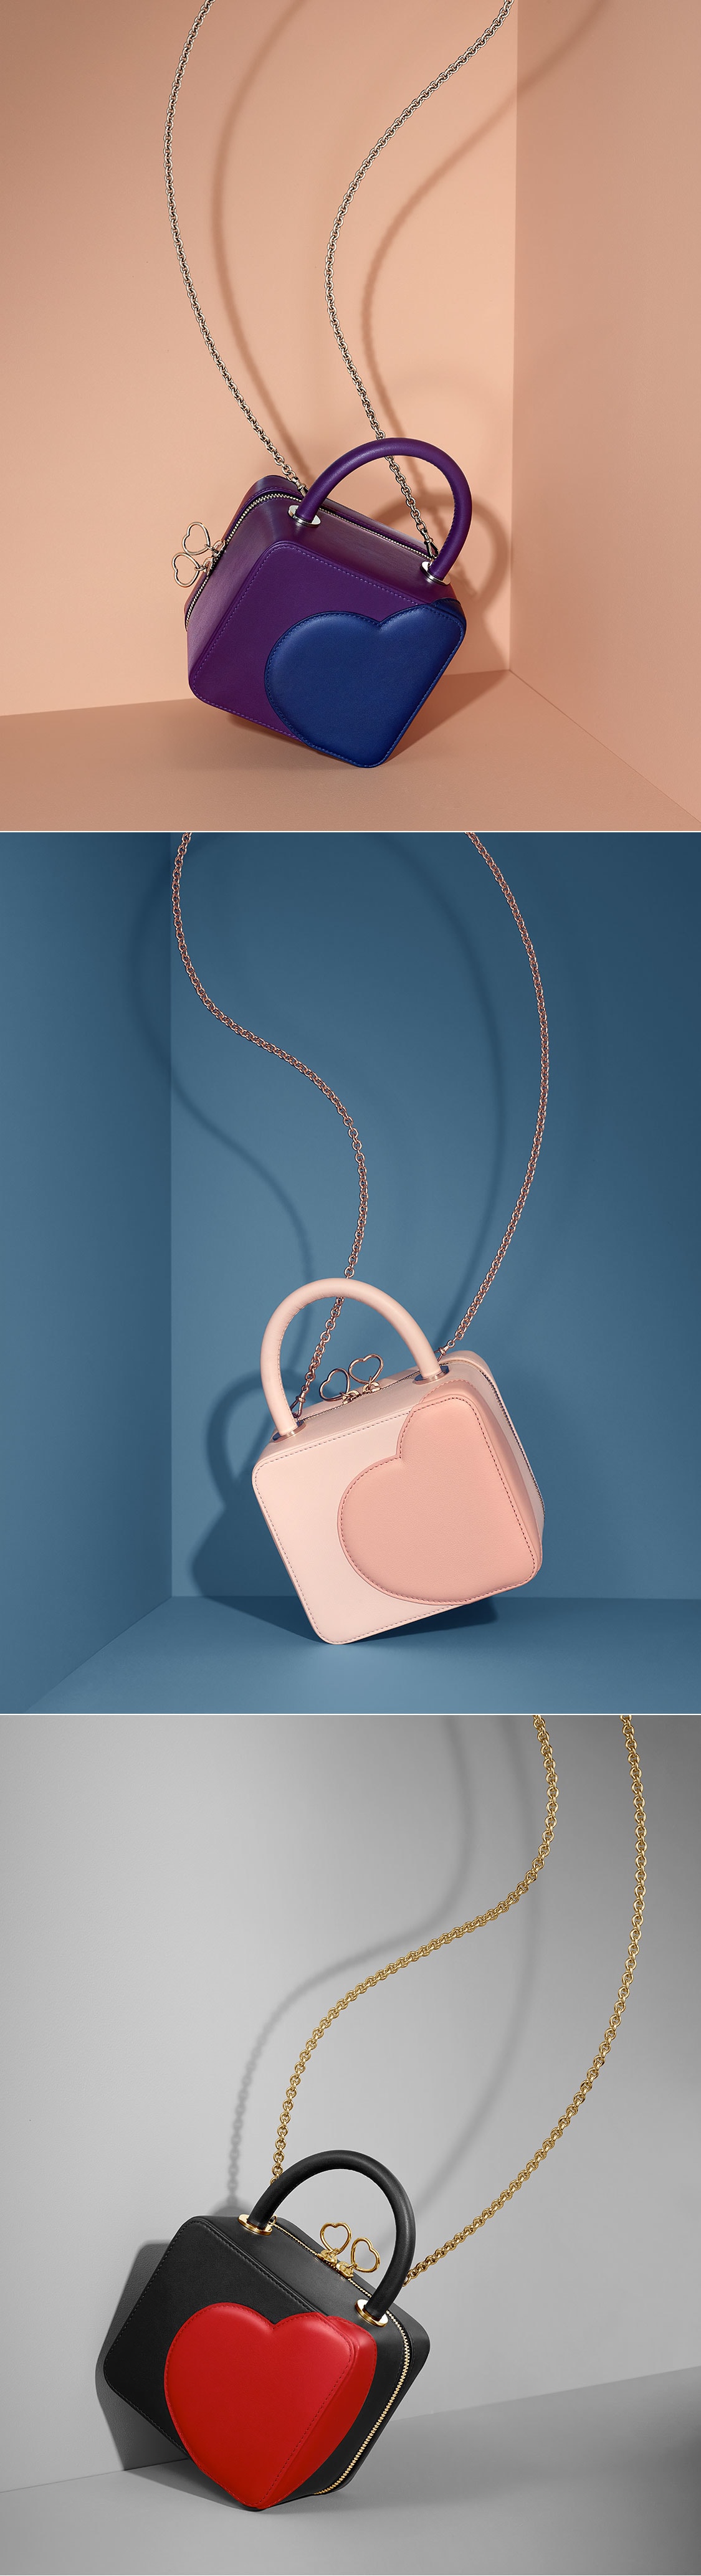 Chloë Sevigny x Chopard luxury bags